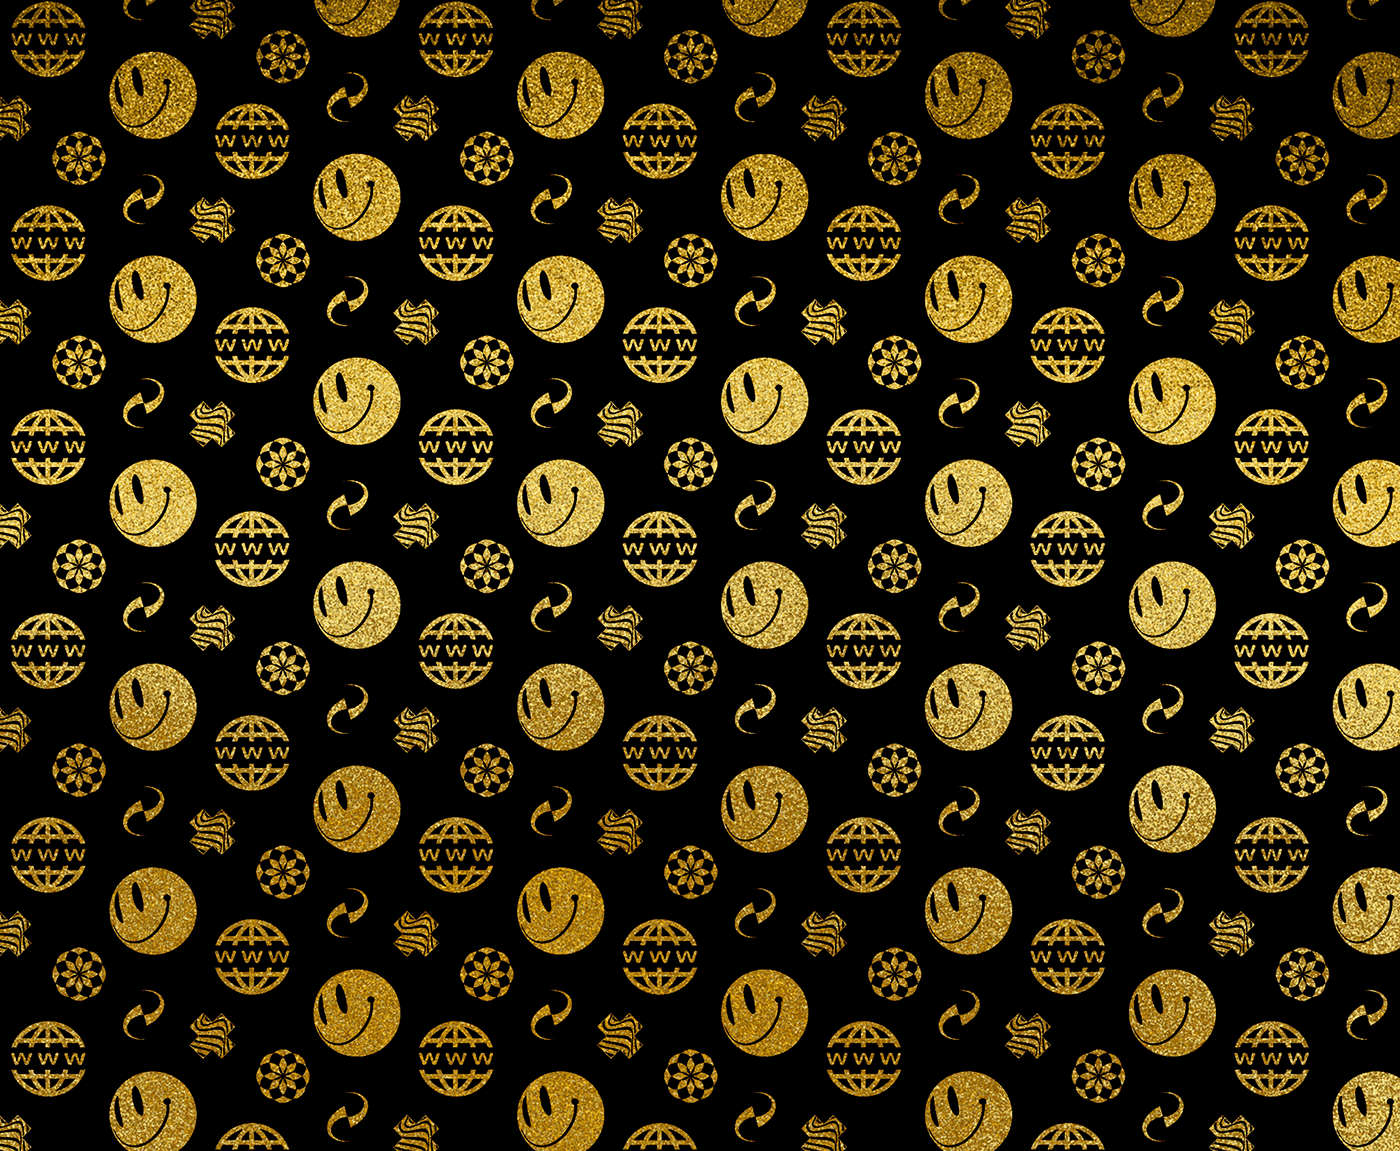 Patterns abstract Y2K aesthetic grunge Cyberpunk gold foil freebie smiley